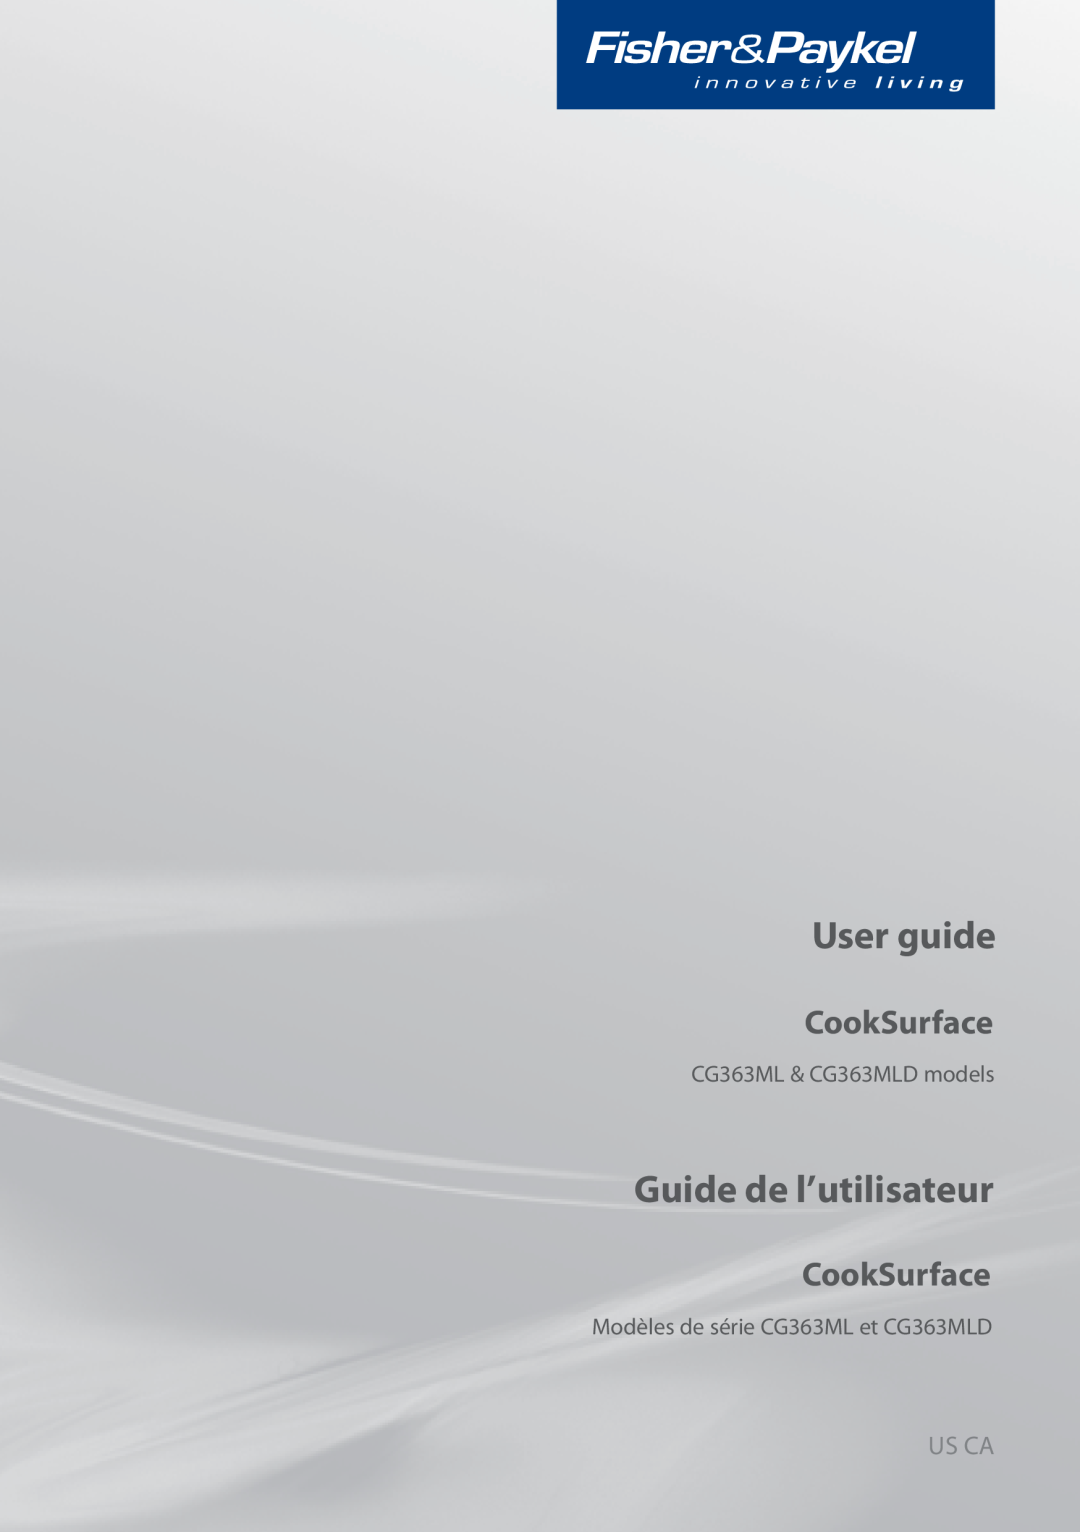 Fisher & Paykel manual User guide, Guide de l’utilisateur, CookSurface, Us Ca, CG363ML & CG363MLD models 